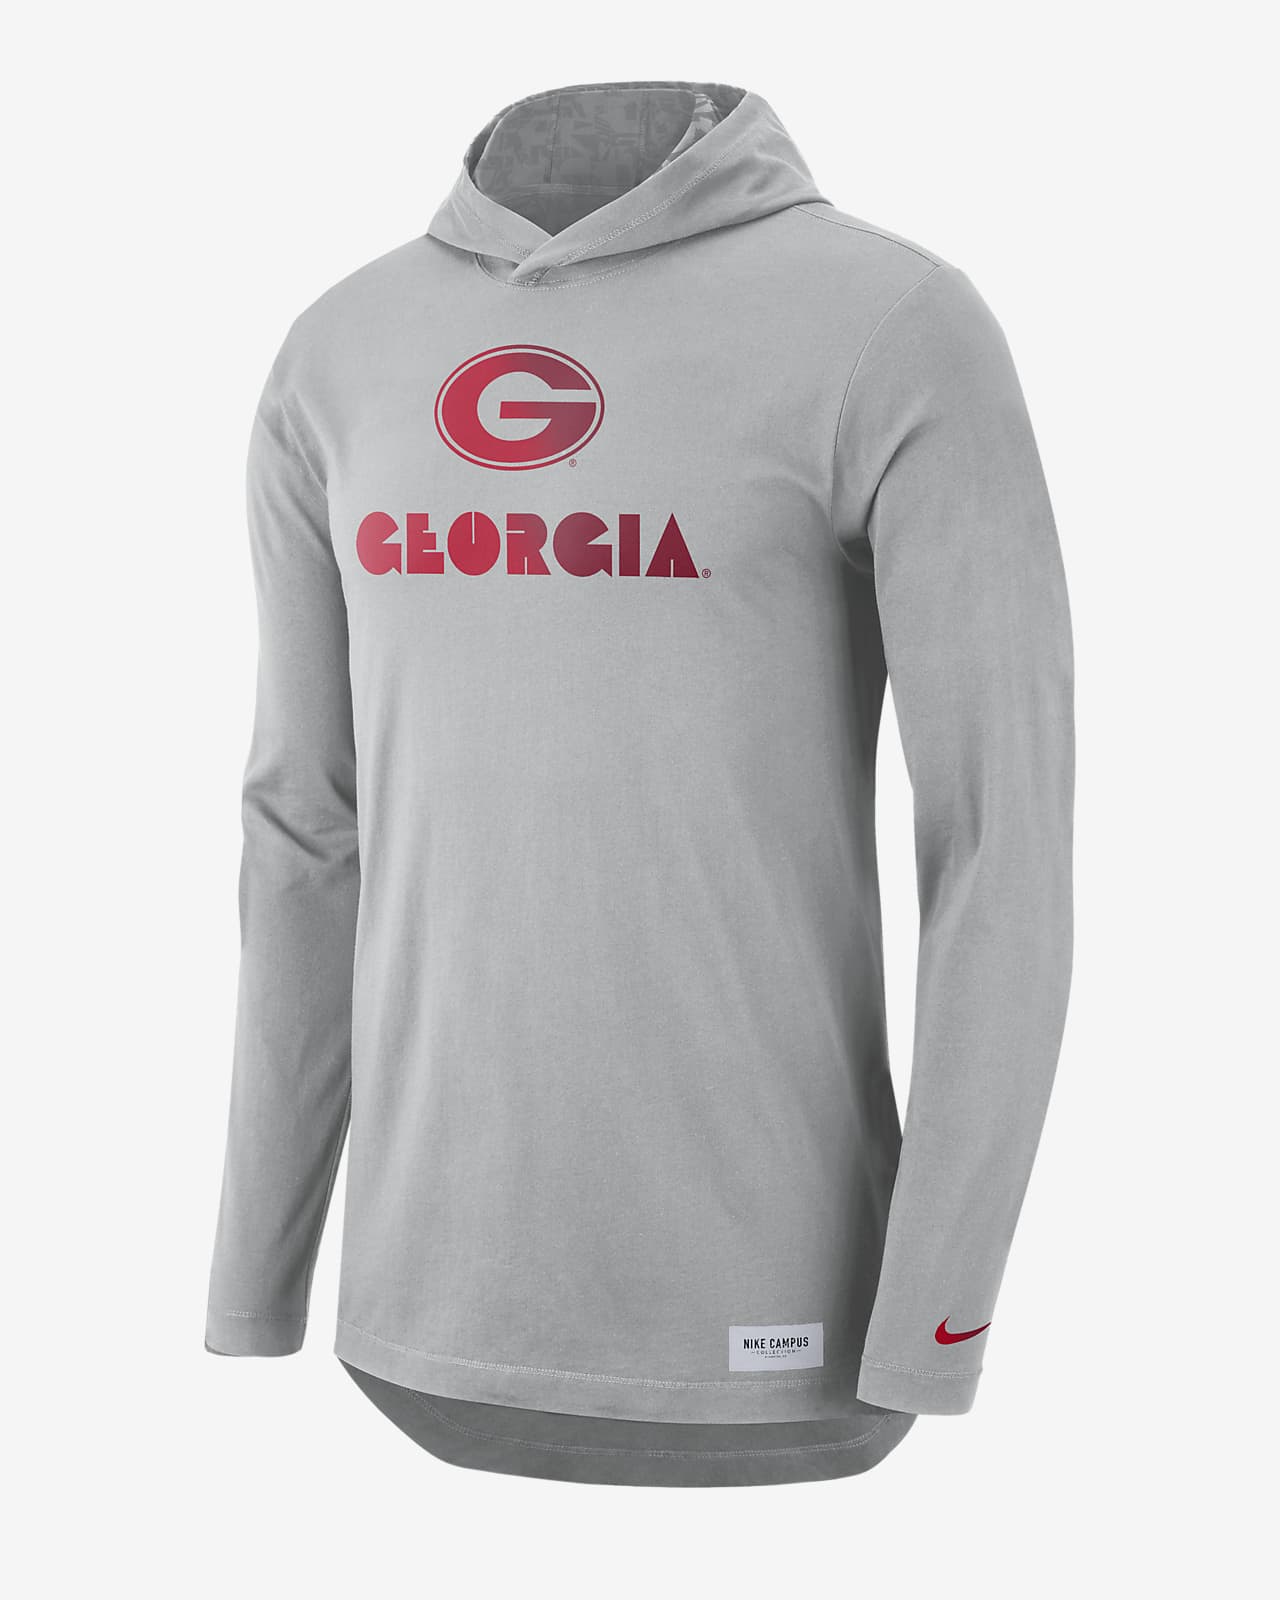 Nike College Dri-FIT (Georgia) Men's Long-Sleeve Hooded T-Shirt